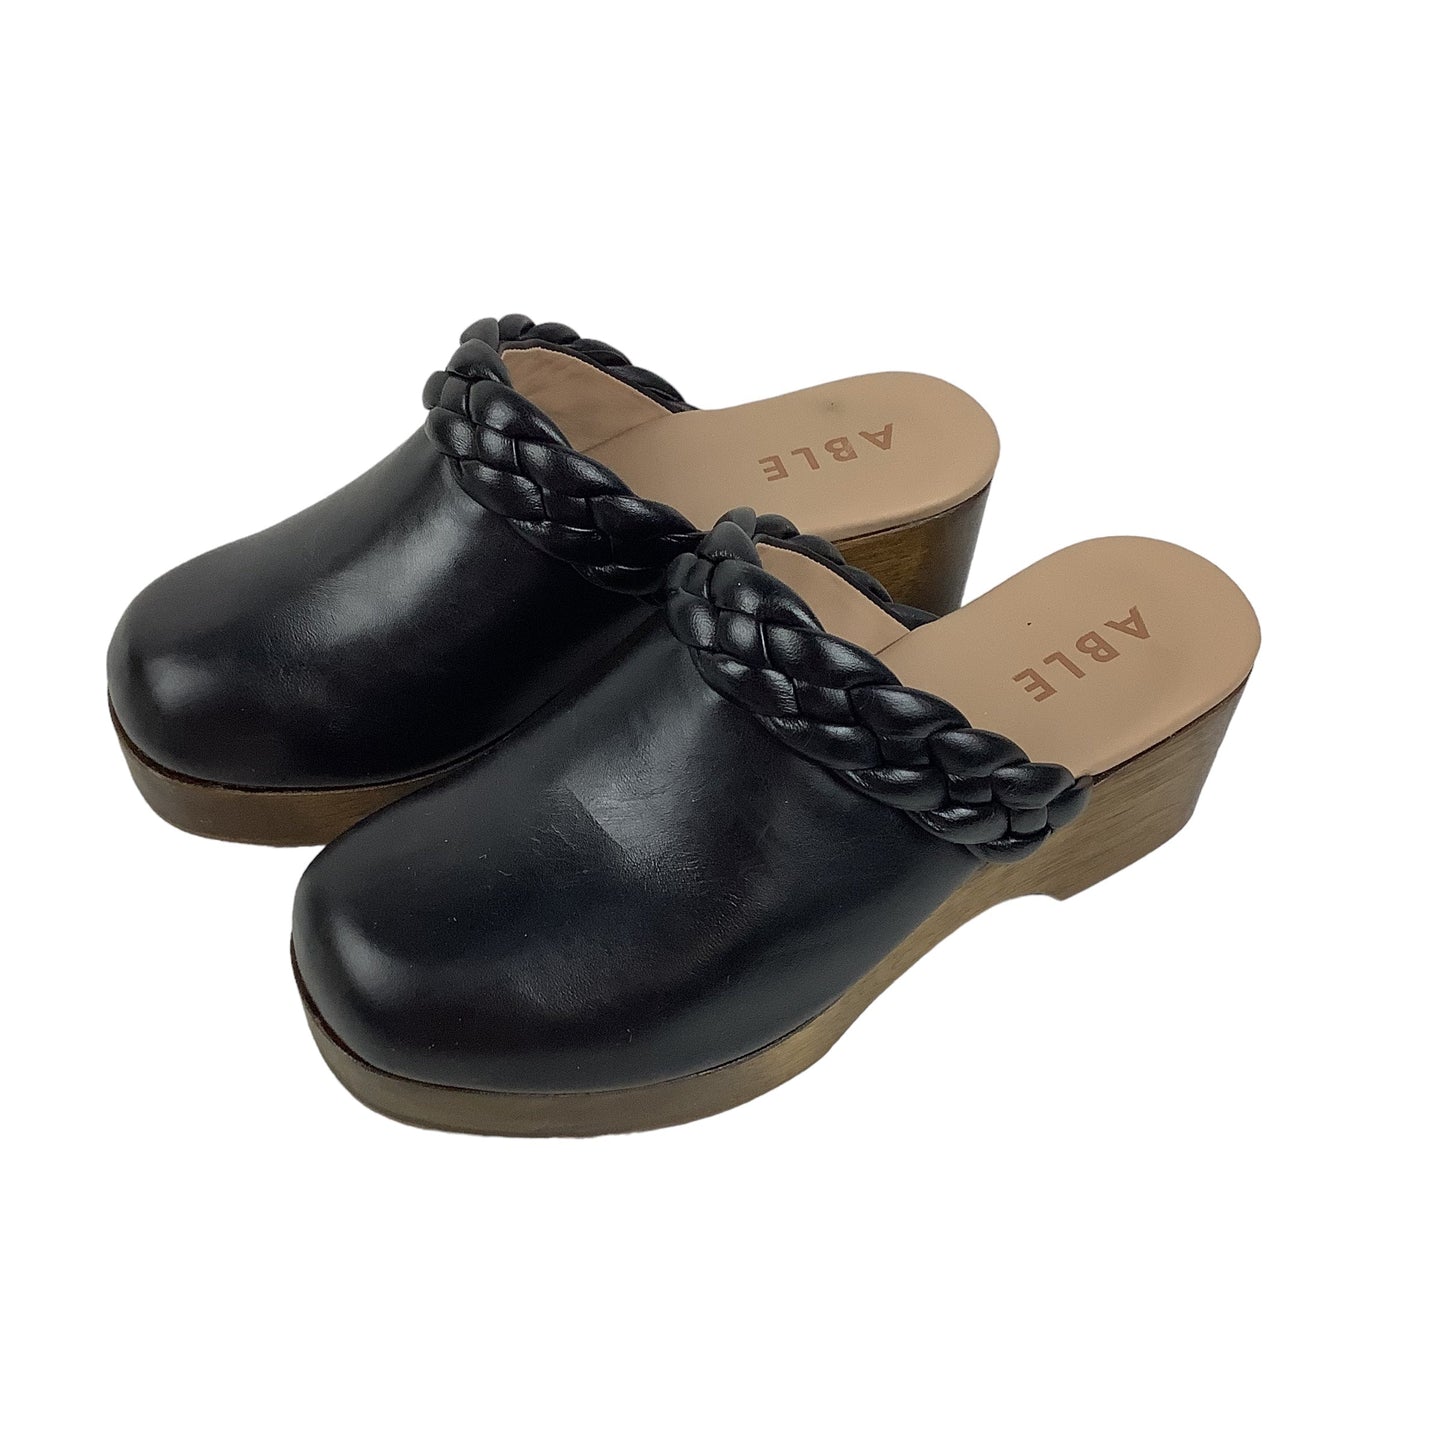 Black Shoes Heels Block Clothes Mentor, Size 7